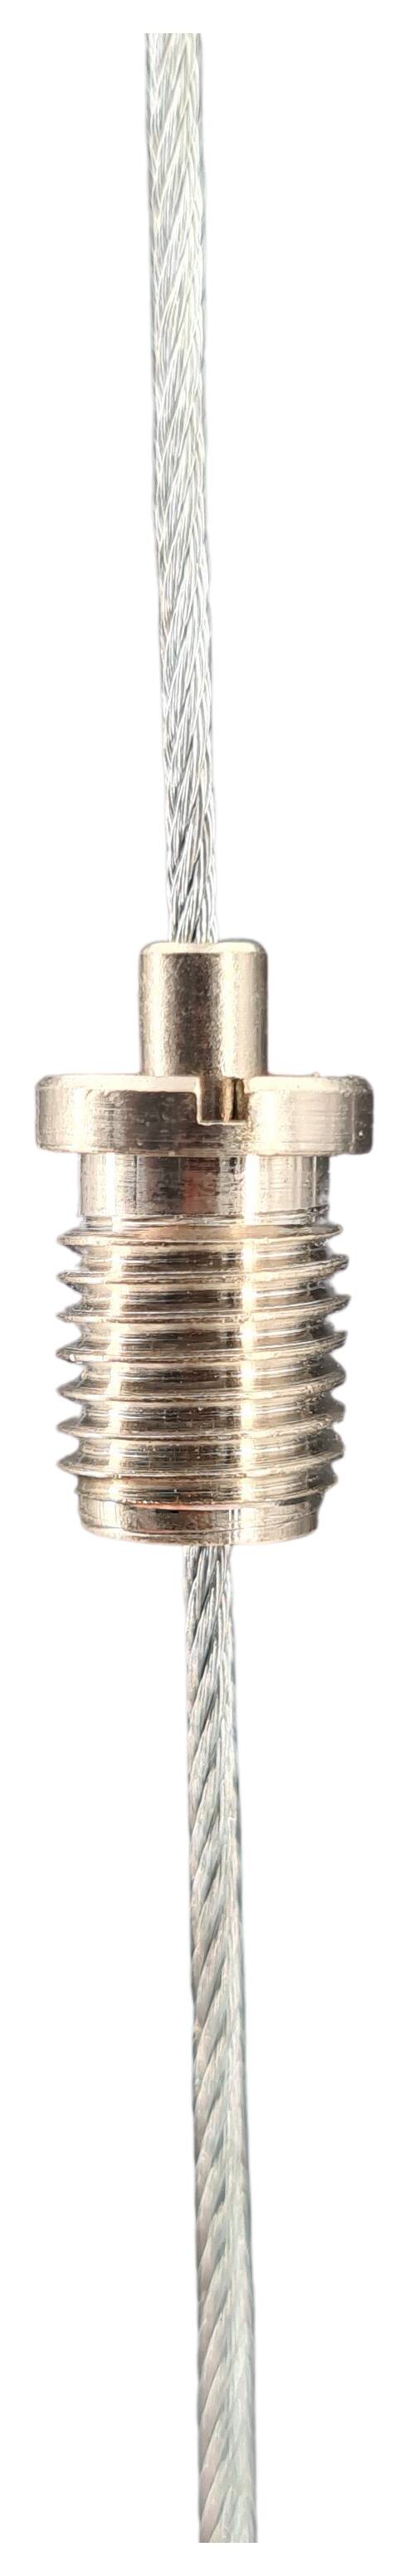 brass cableblocker with collar + slot 9x12 M8x1x10 male nickel